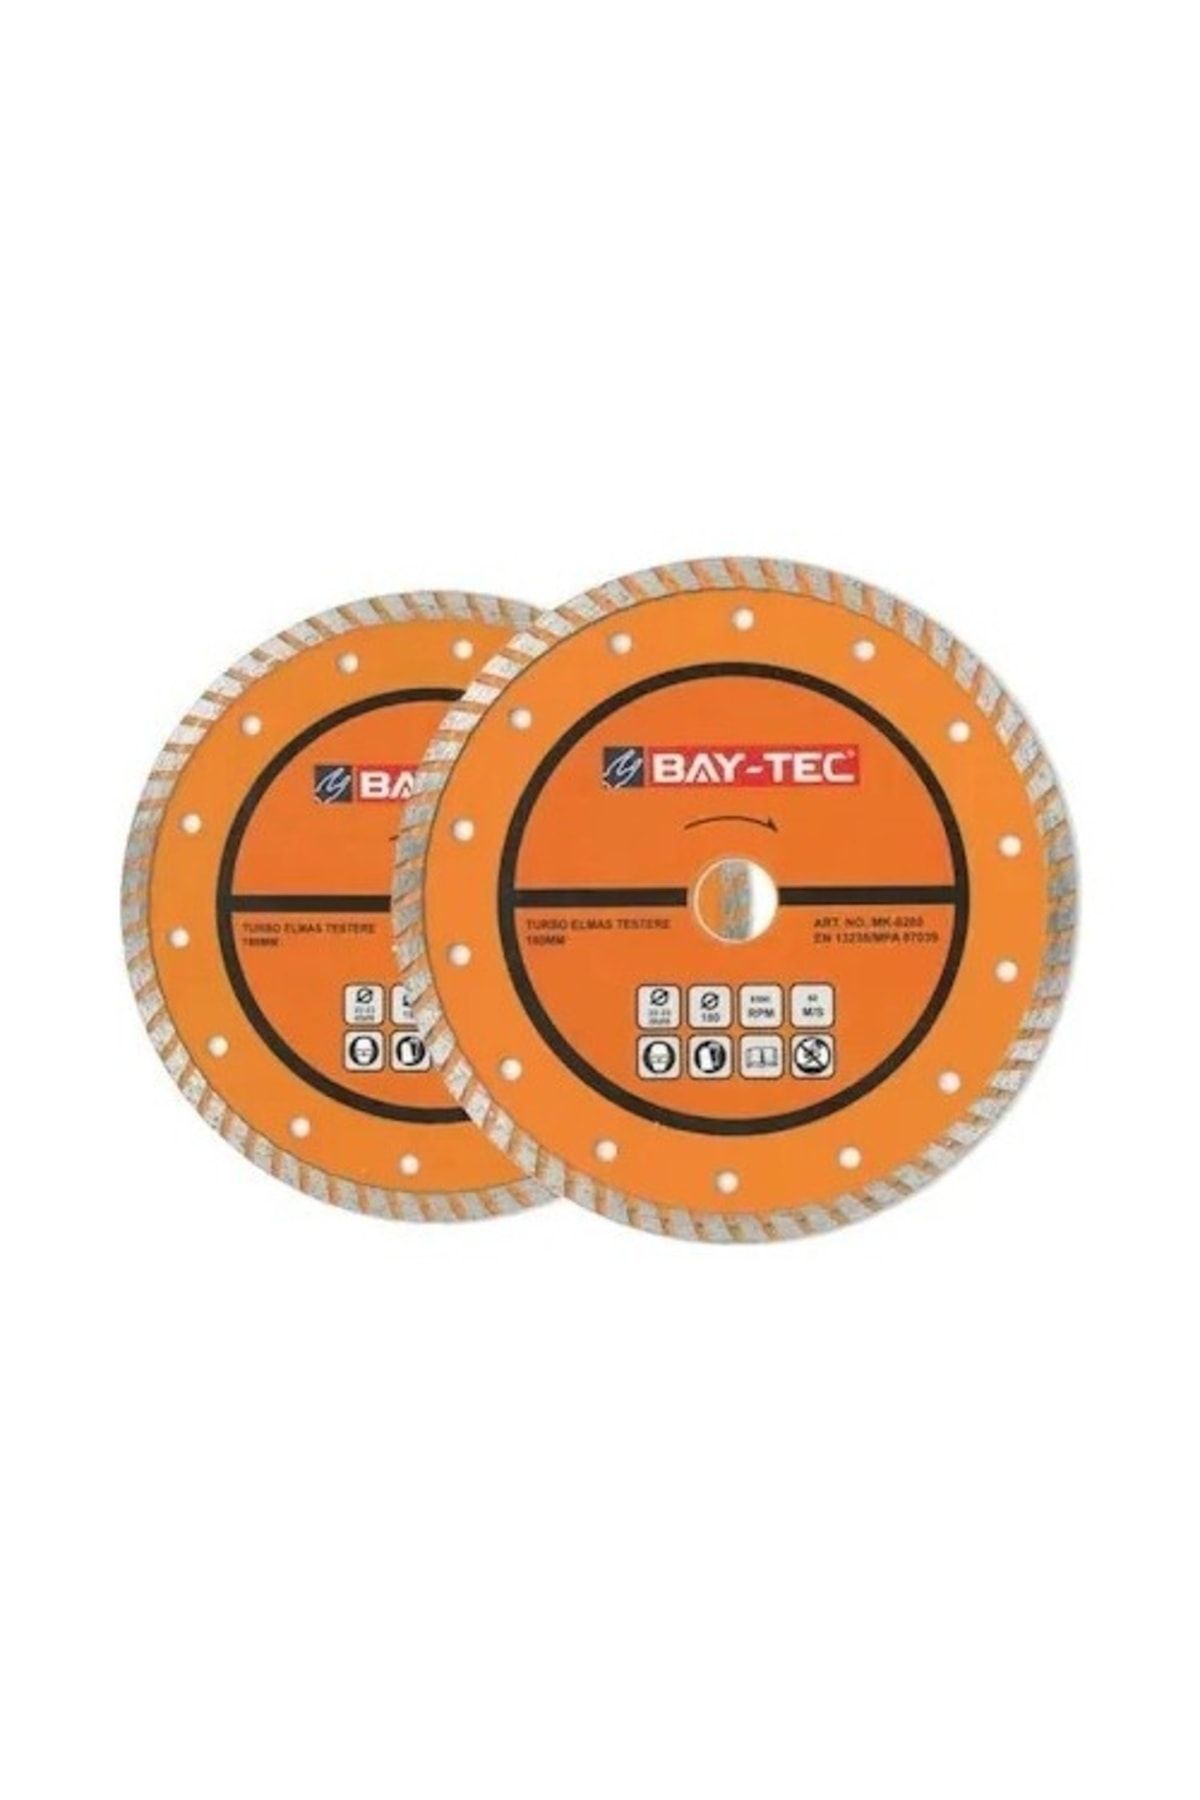 Baytec Bay-tec Mk0270 Turbo Elmas Testere Kesici Disk 115mm